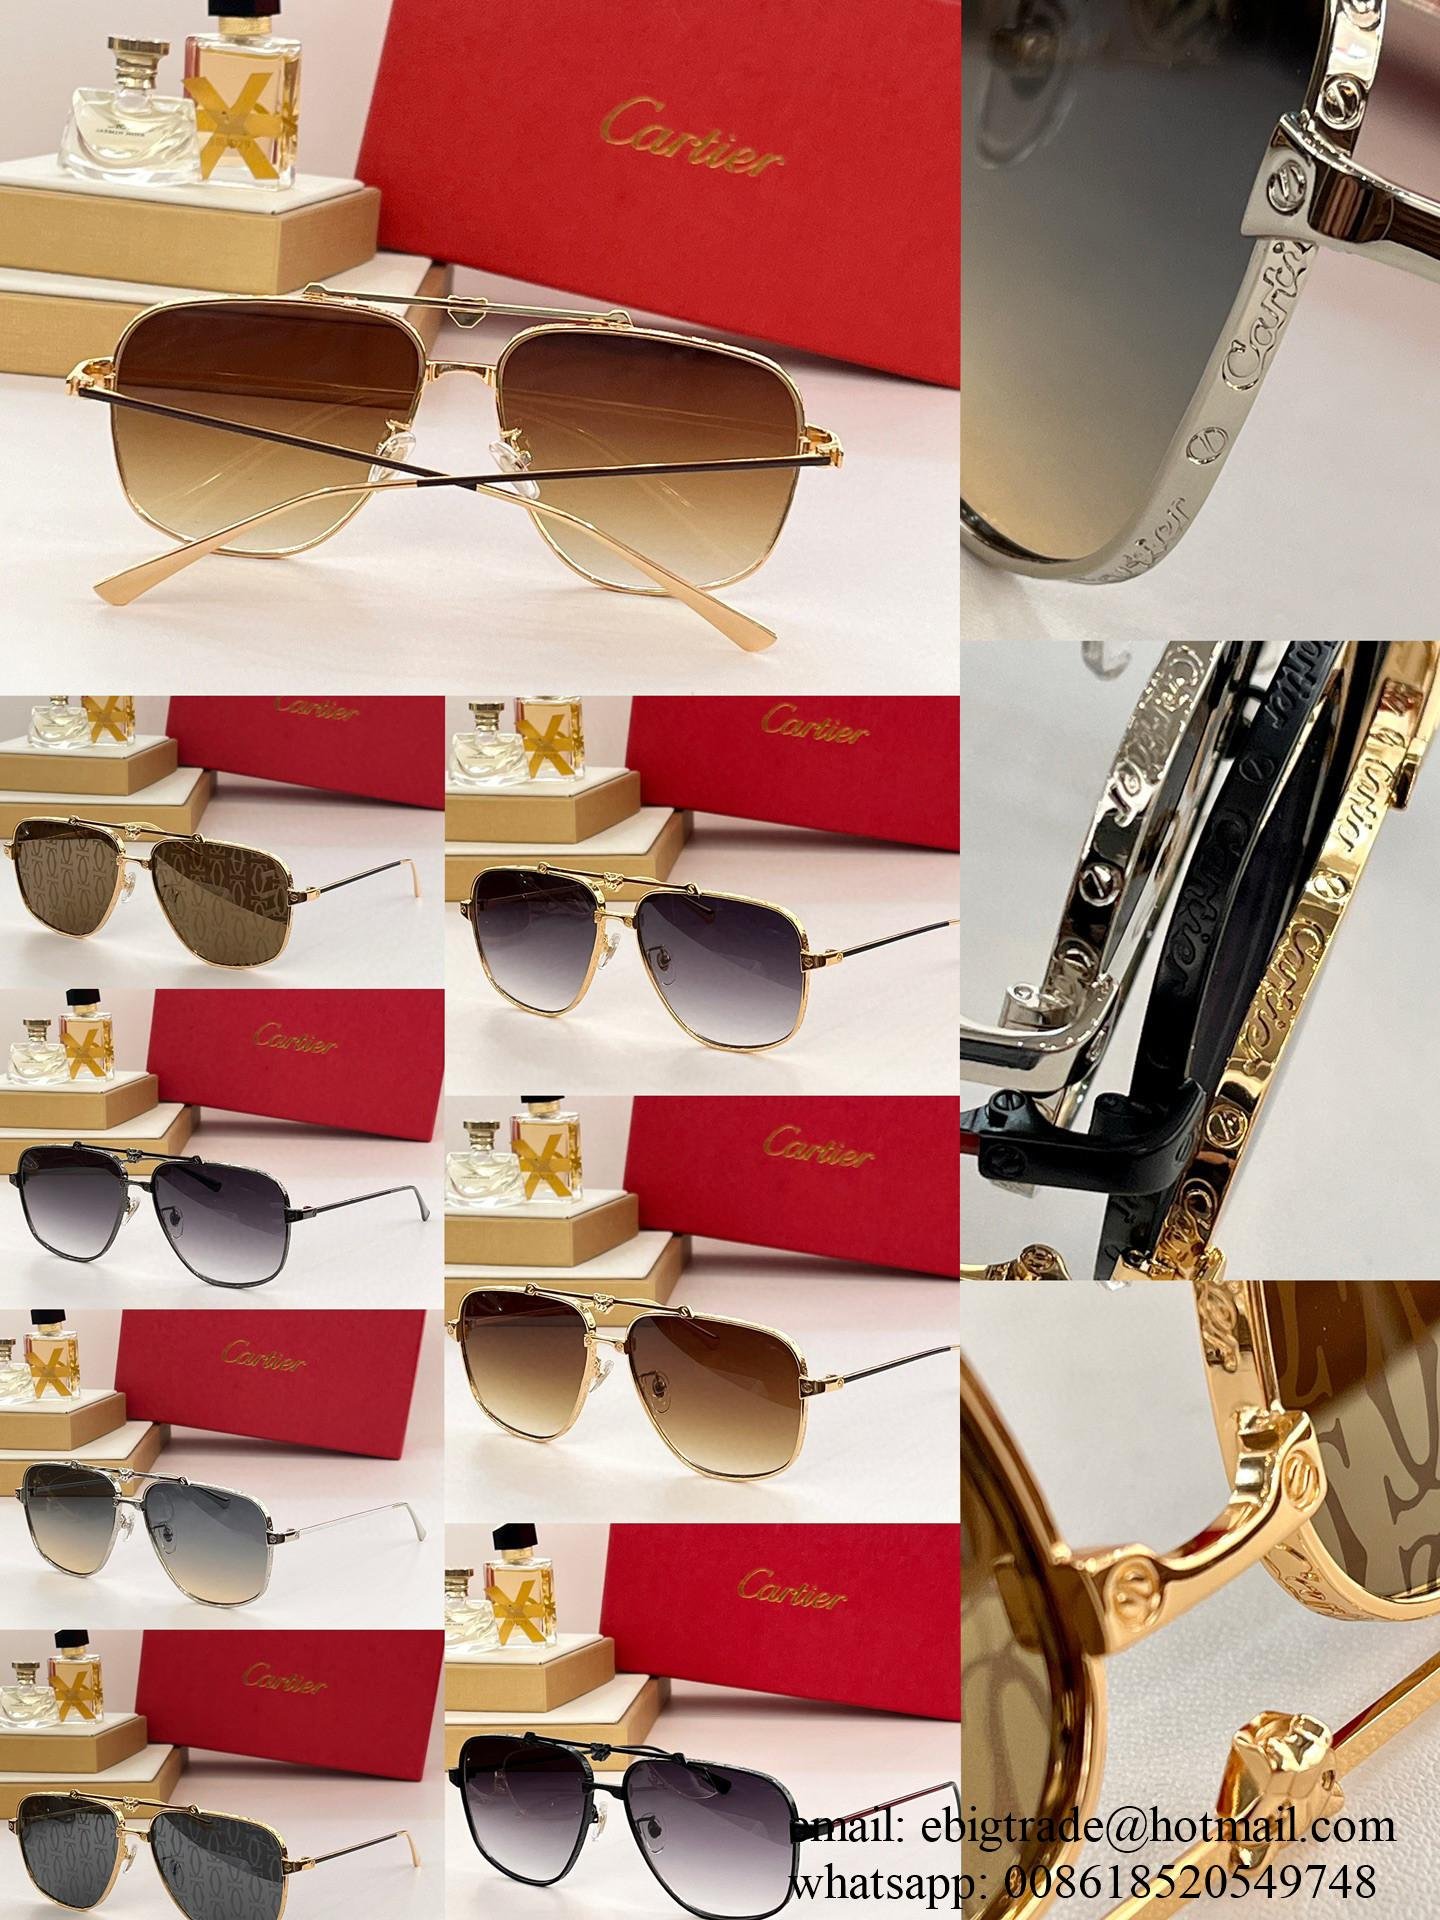 Cheap Cartier Sunglasses Online store discount Cartier Sunglasses Cartier Glass 5